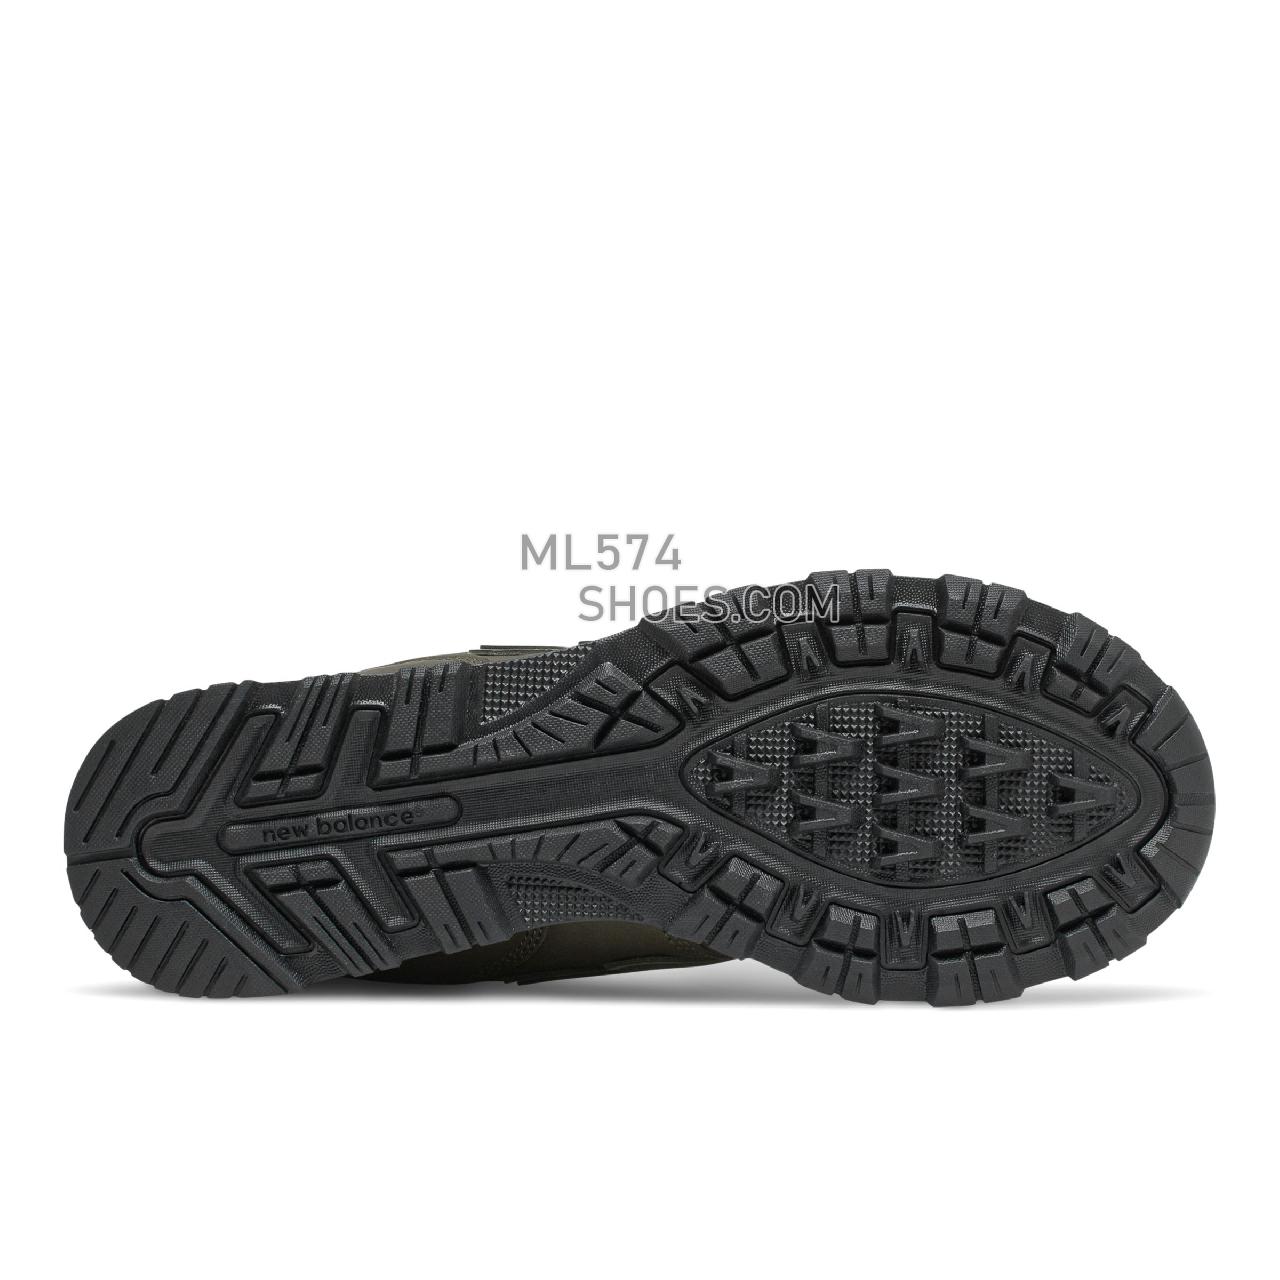 New Balance MH574V1 - Men's Classic Sneakers - Black Olive with Moonbeam - MH574BG1